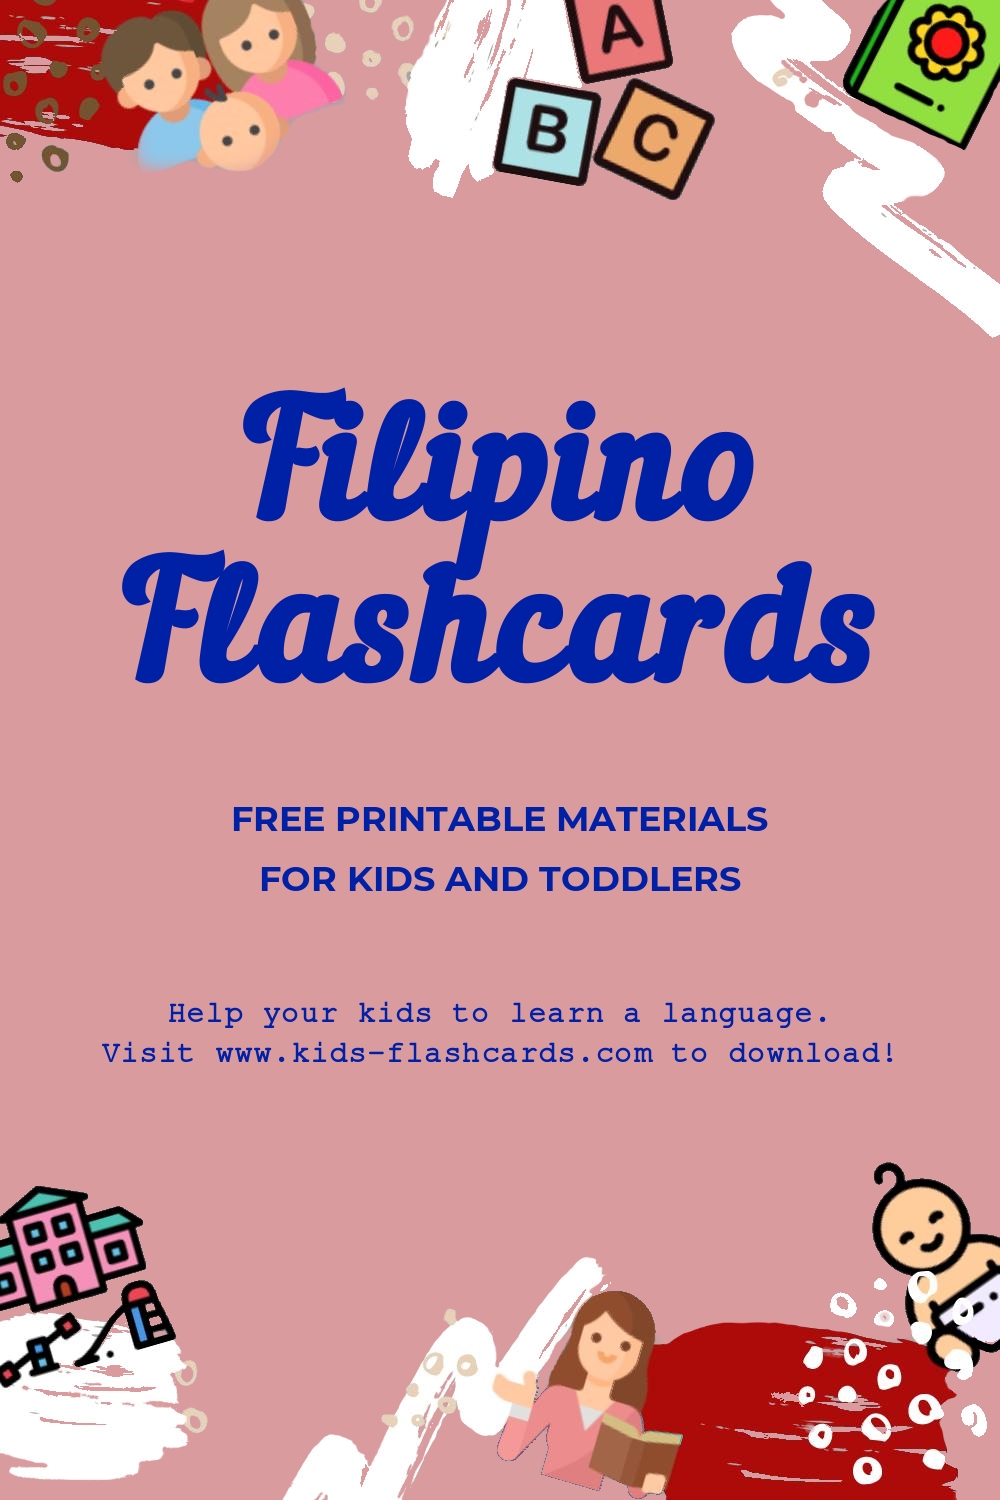 Worksheets to learn Filipino language